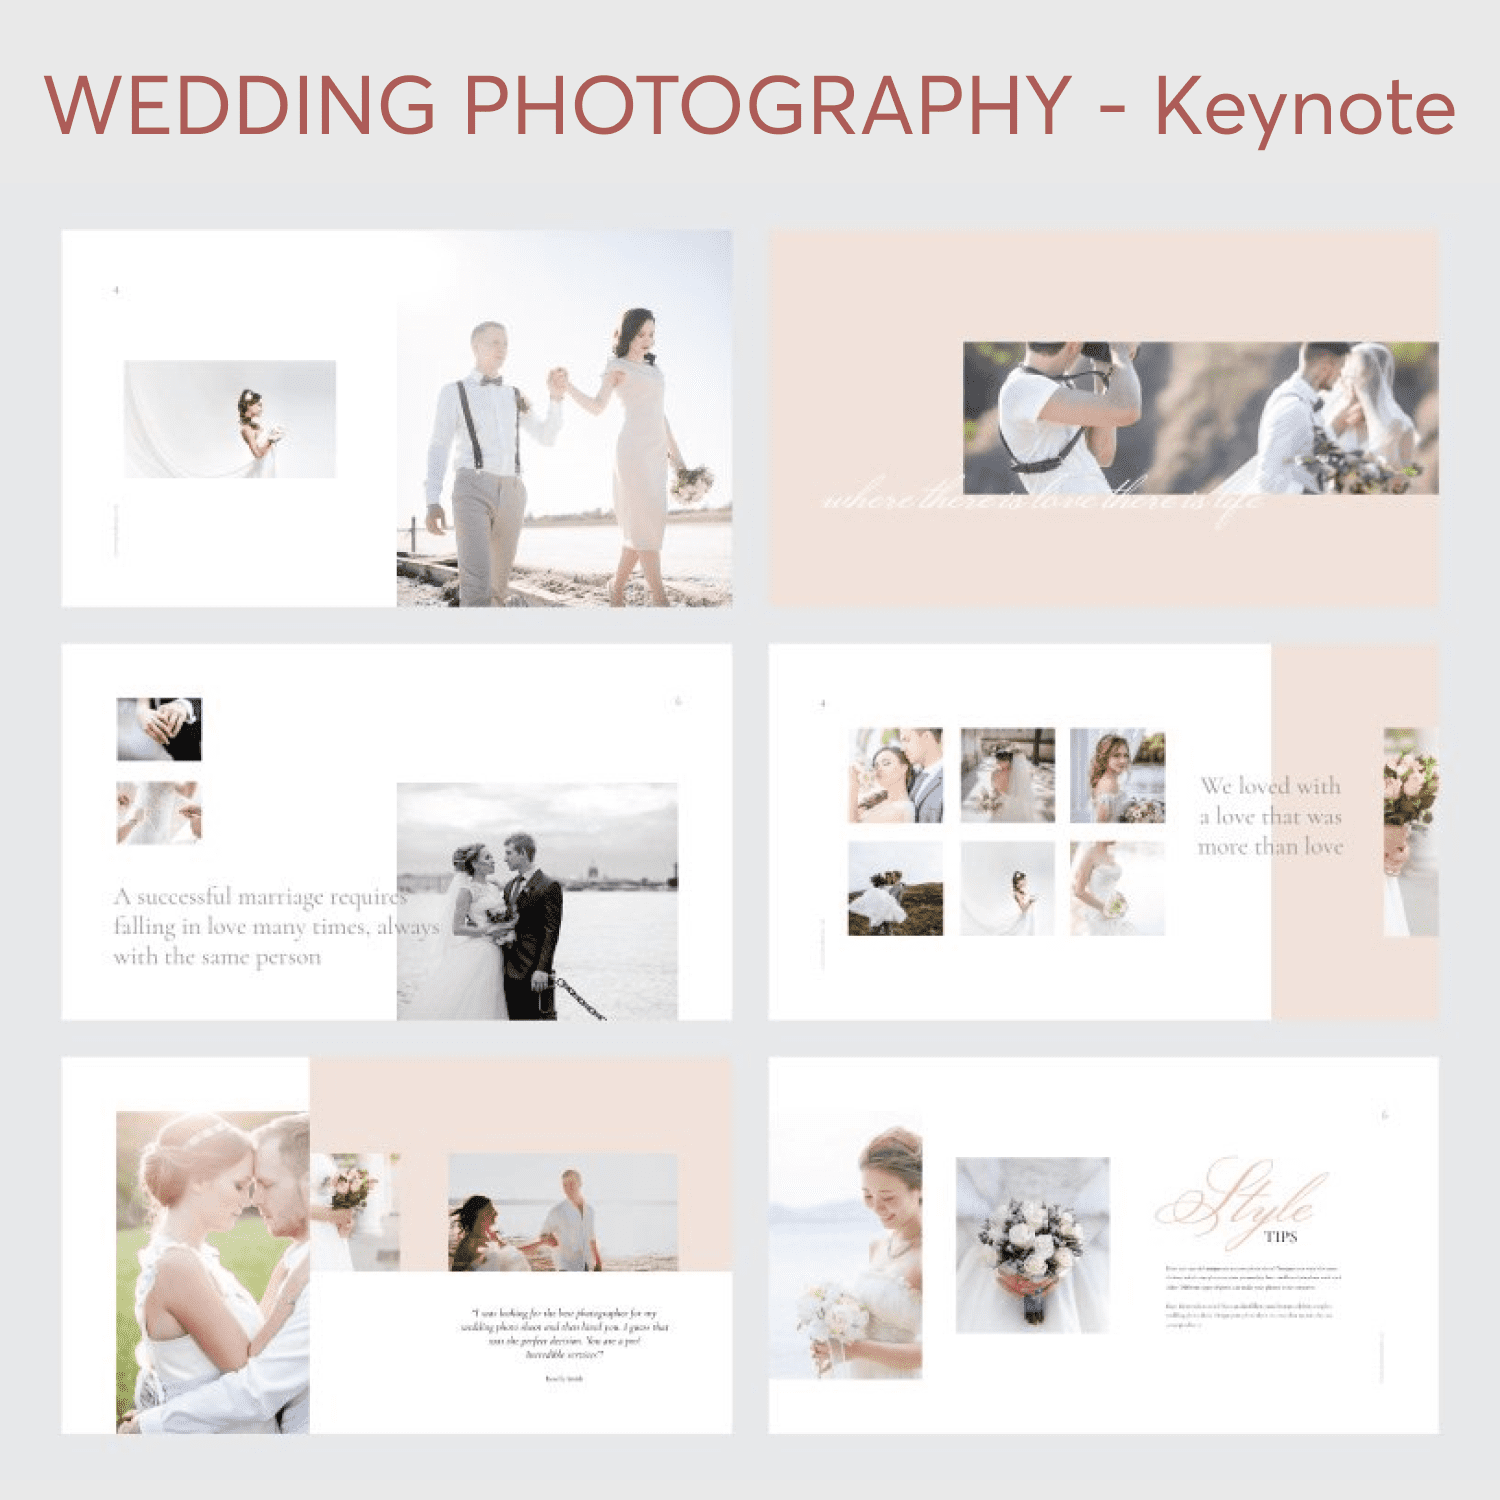 WEDDING PHOTOGRAPHY - Keynote cover.